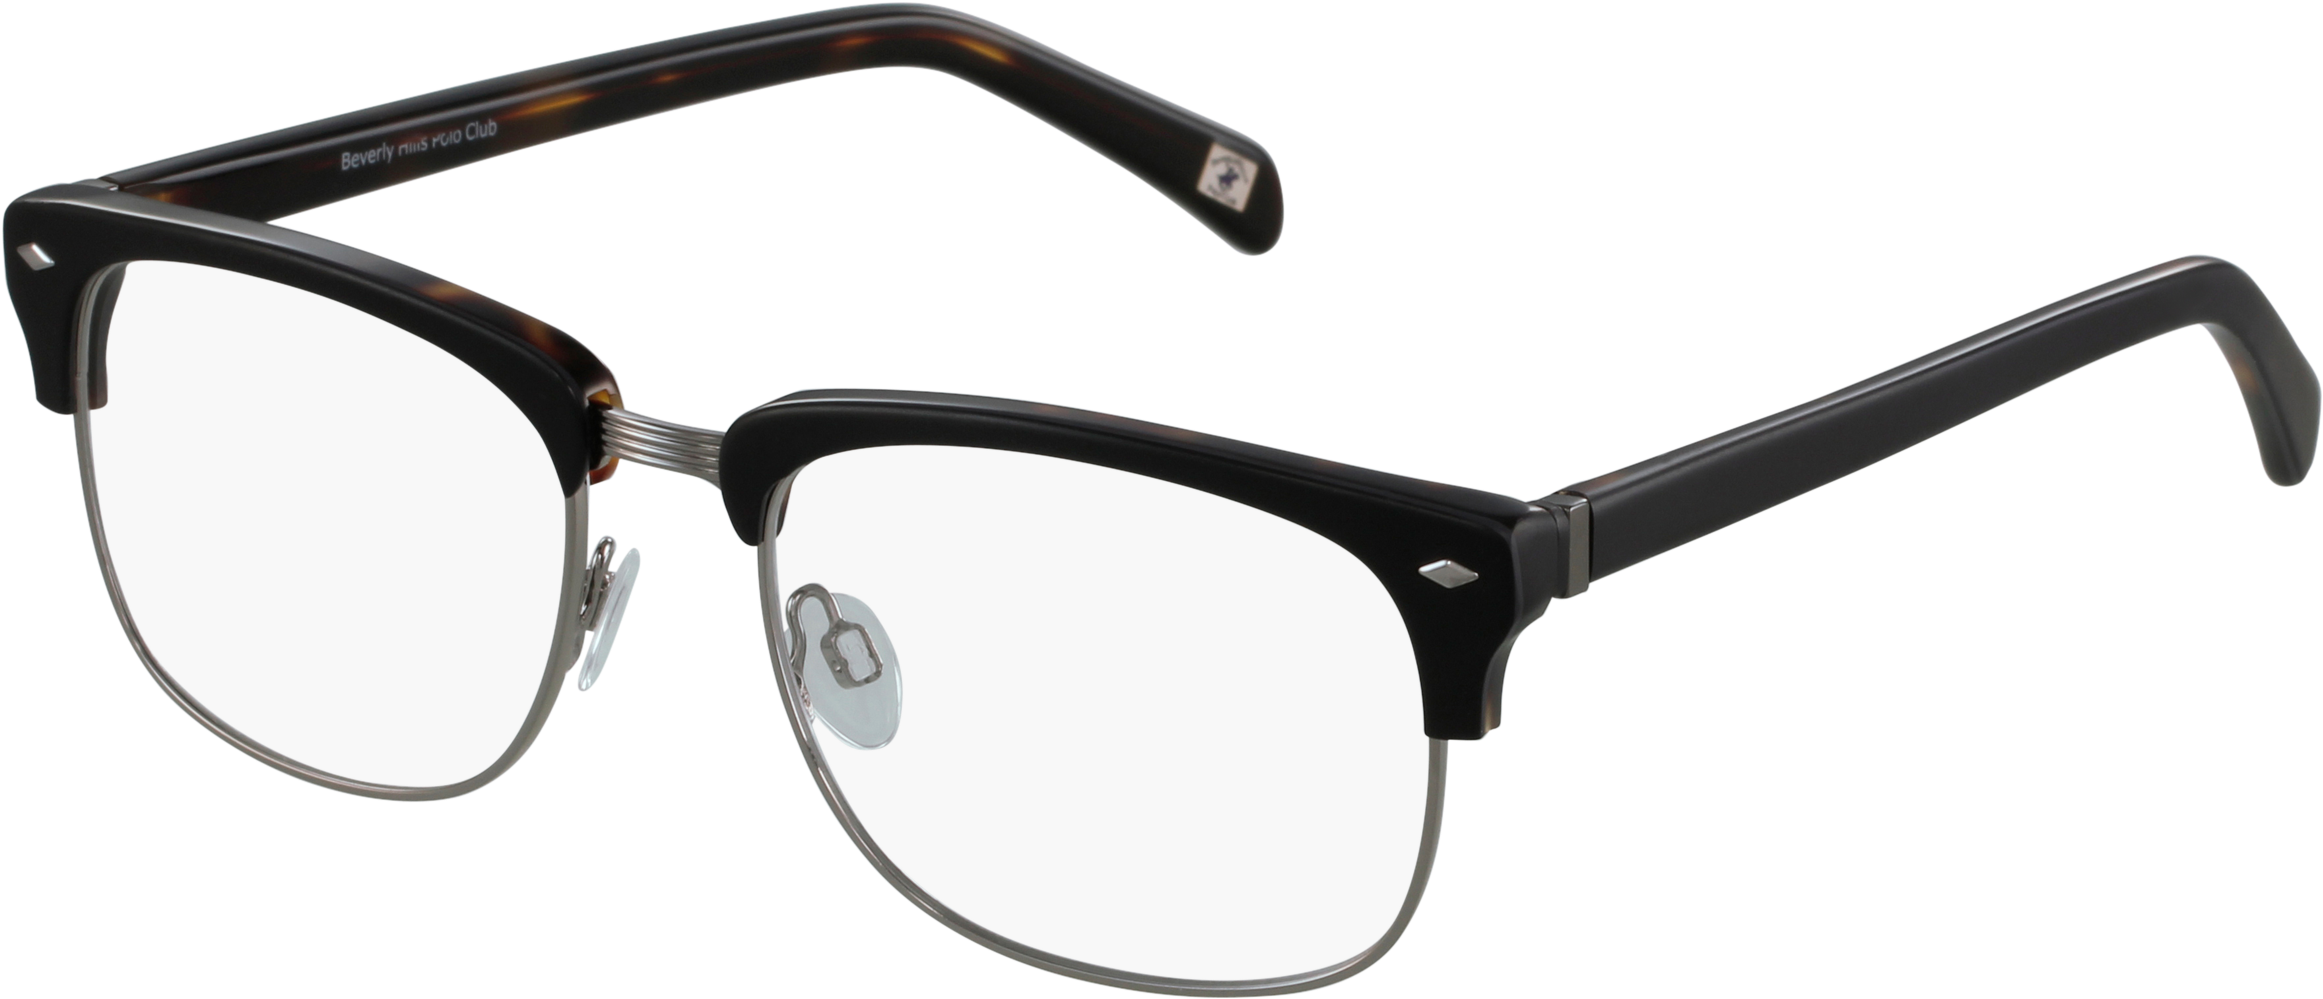 Eyeglass Eyeglasses Sunglasses Ray-ban Browline Prescription - Beverly Hills Polo Club Bhpc 67 Clipart (2500x1400), Png Download